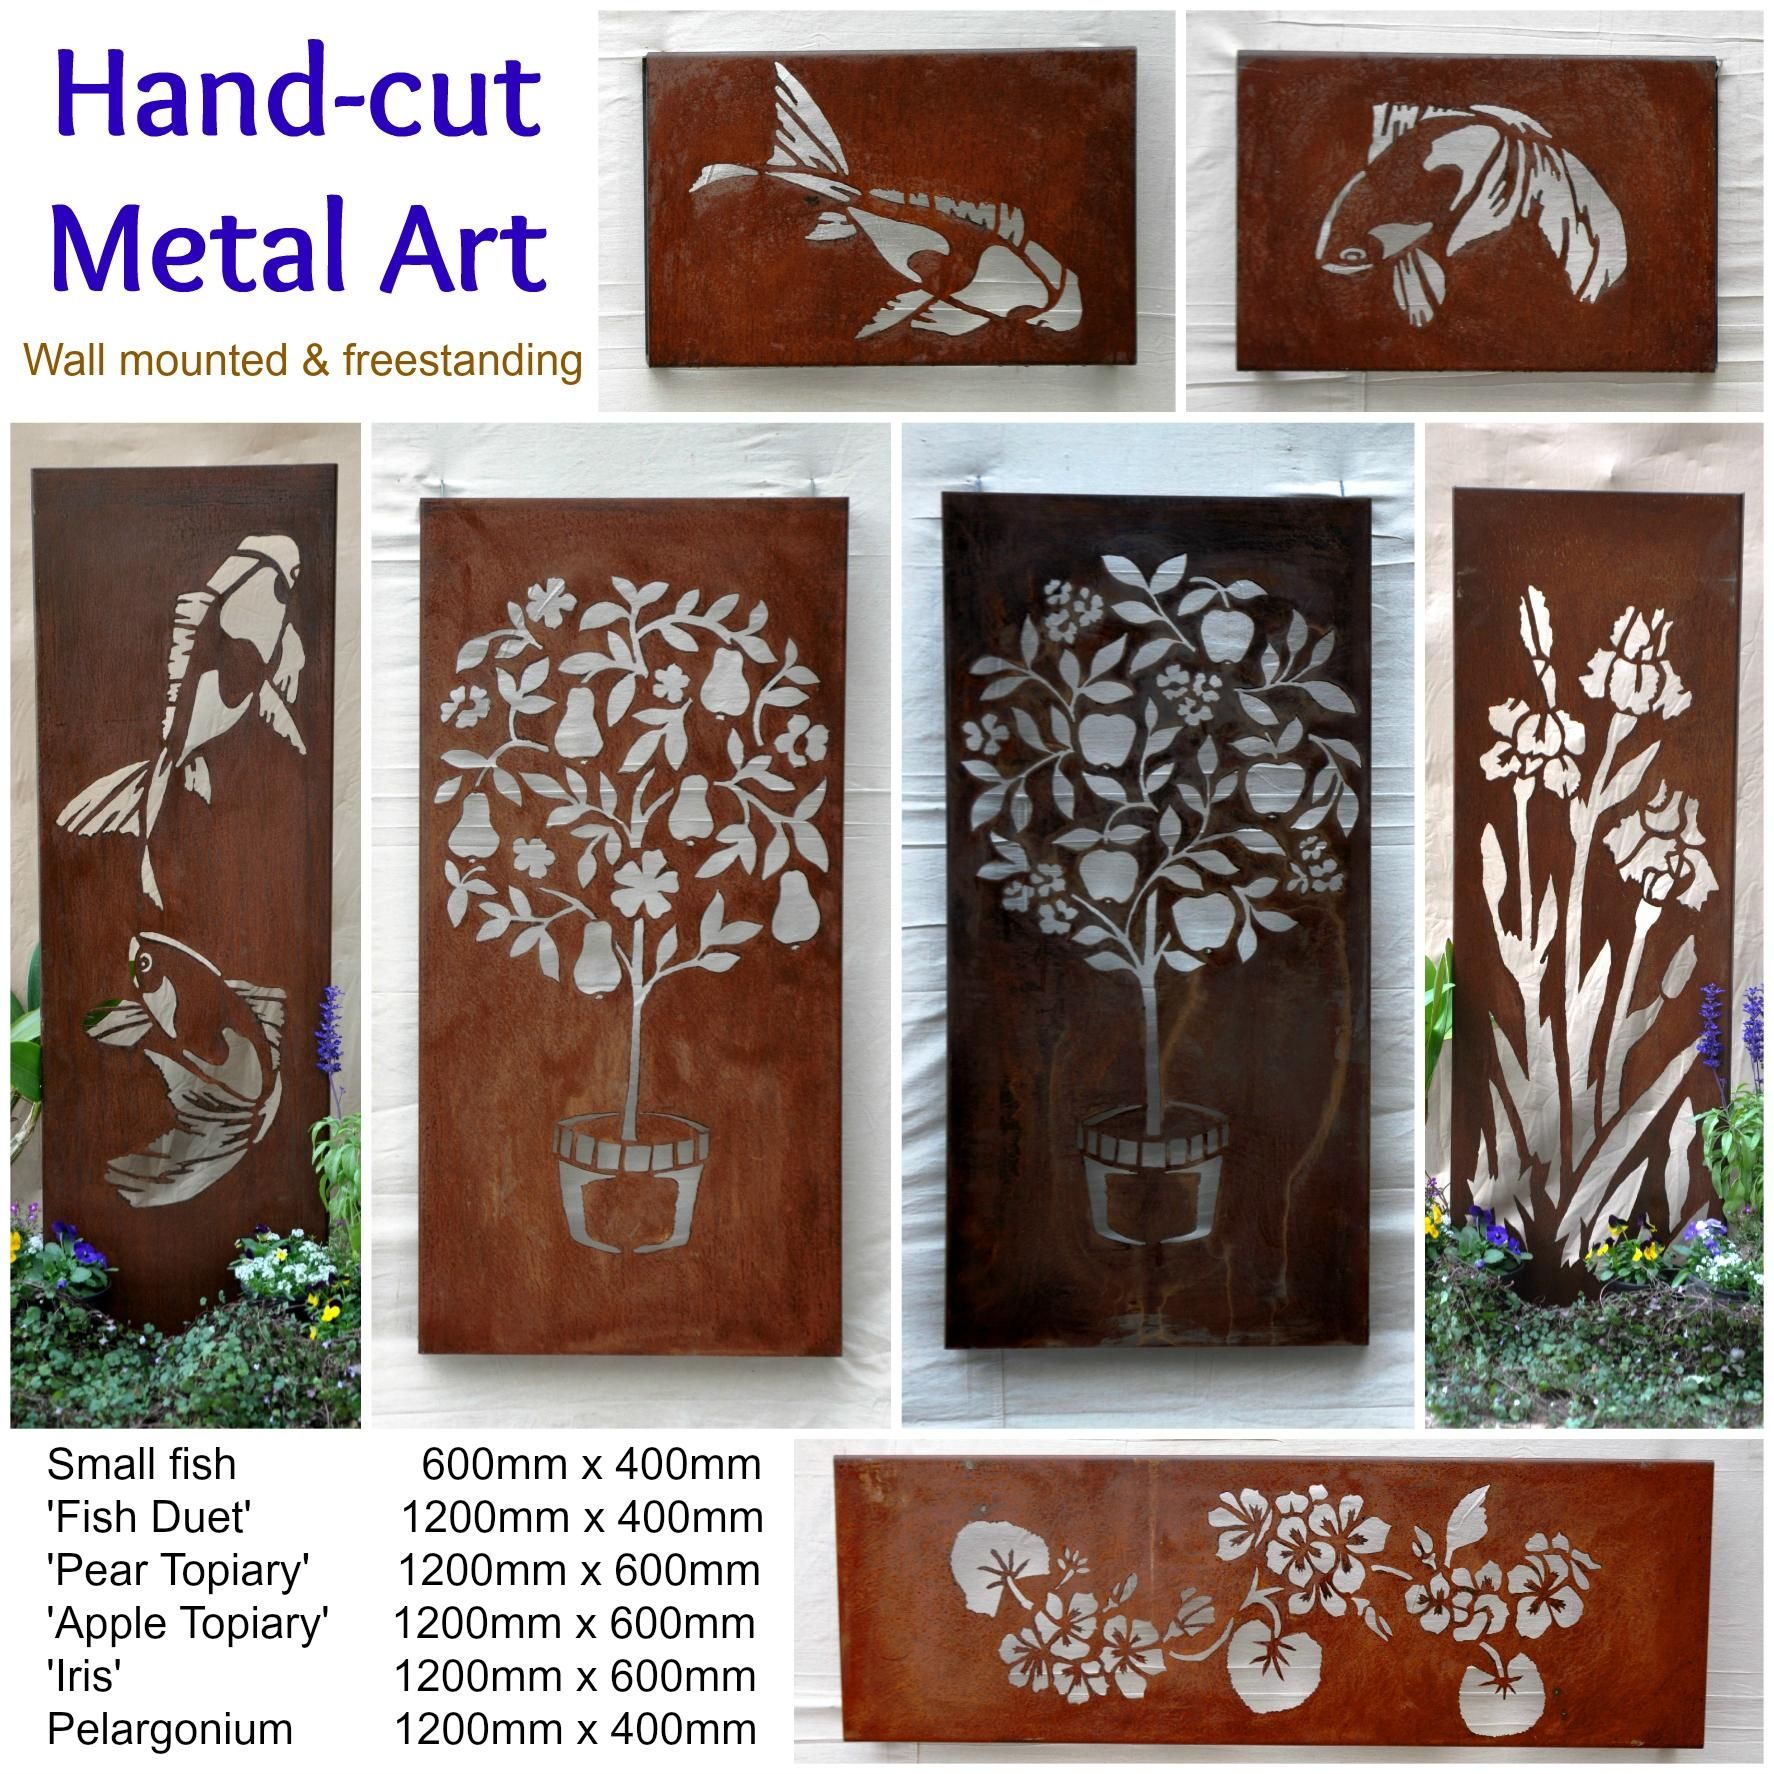 Australian Metal Artwork, Garden Art, Metal Wall Art | Farmweld With Regard To Outdoor Metal Art For Walls (View 17 of 20)